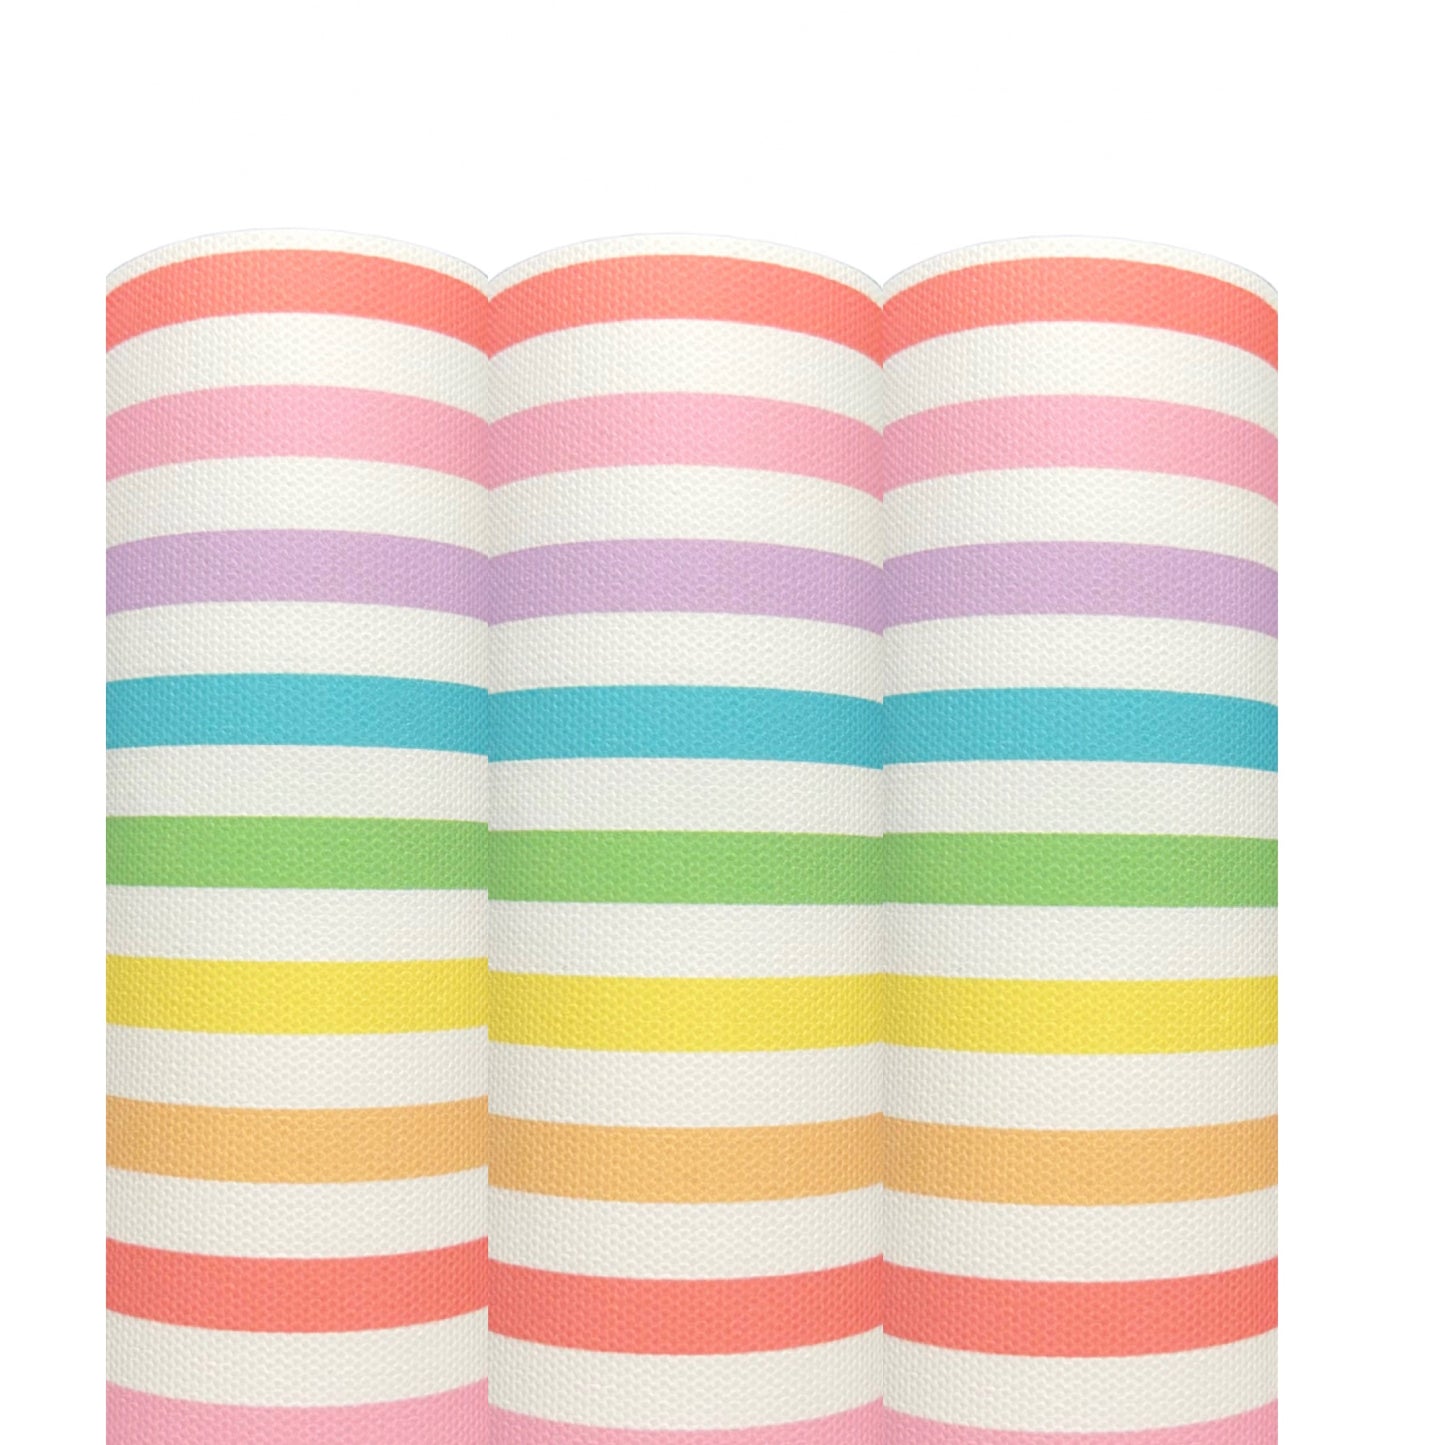 Stripe rainbow themed printed Canvas fabric